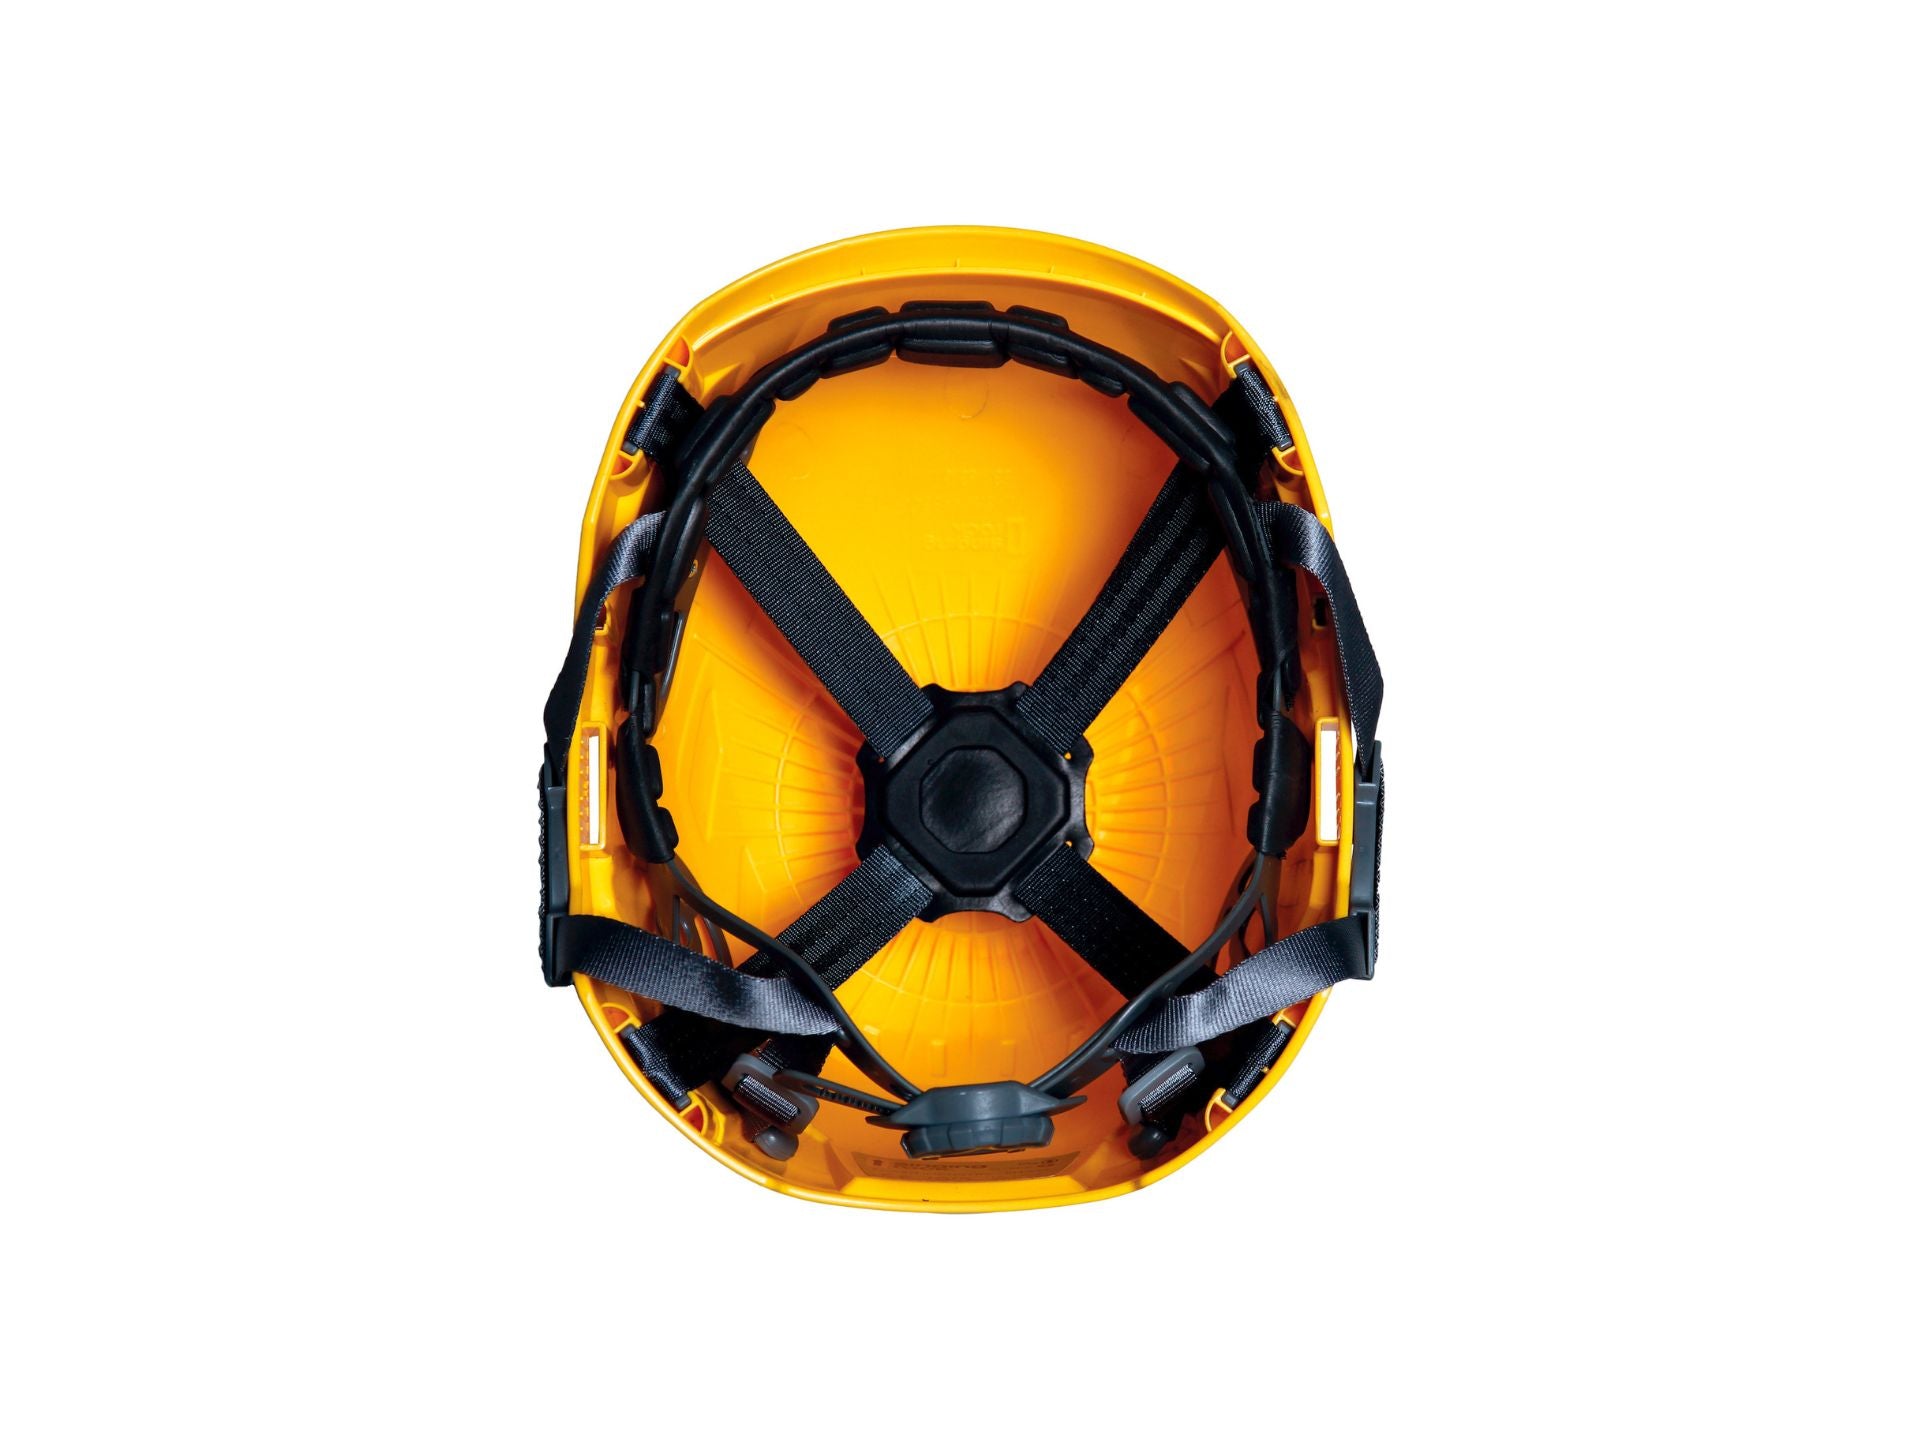 Singing Rock Flash Industry Safety Helmet - Happy Biner